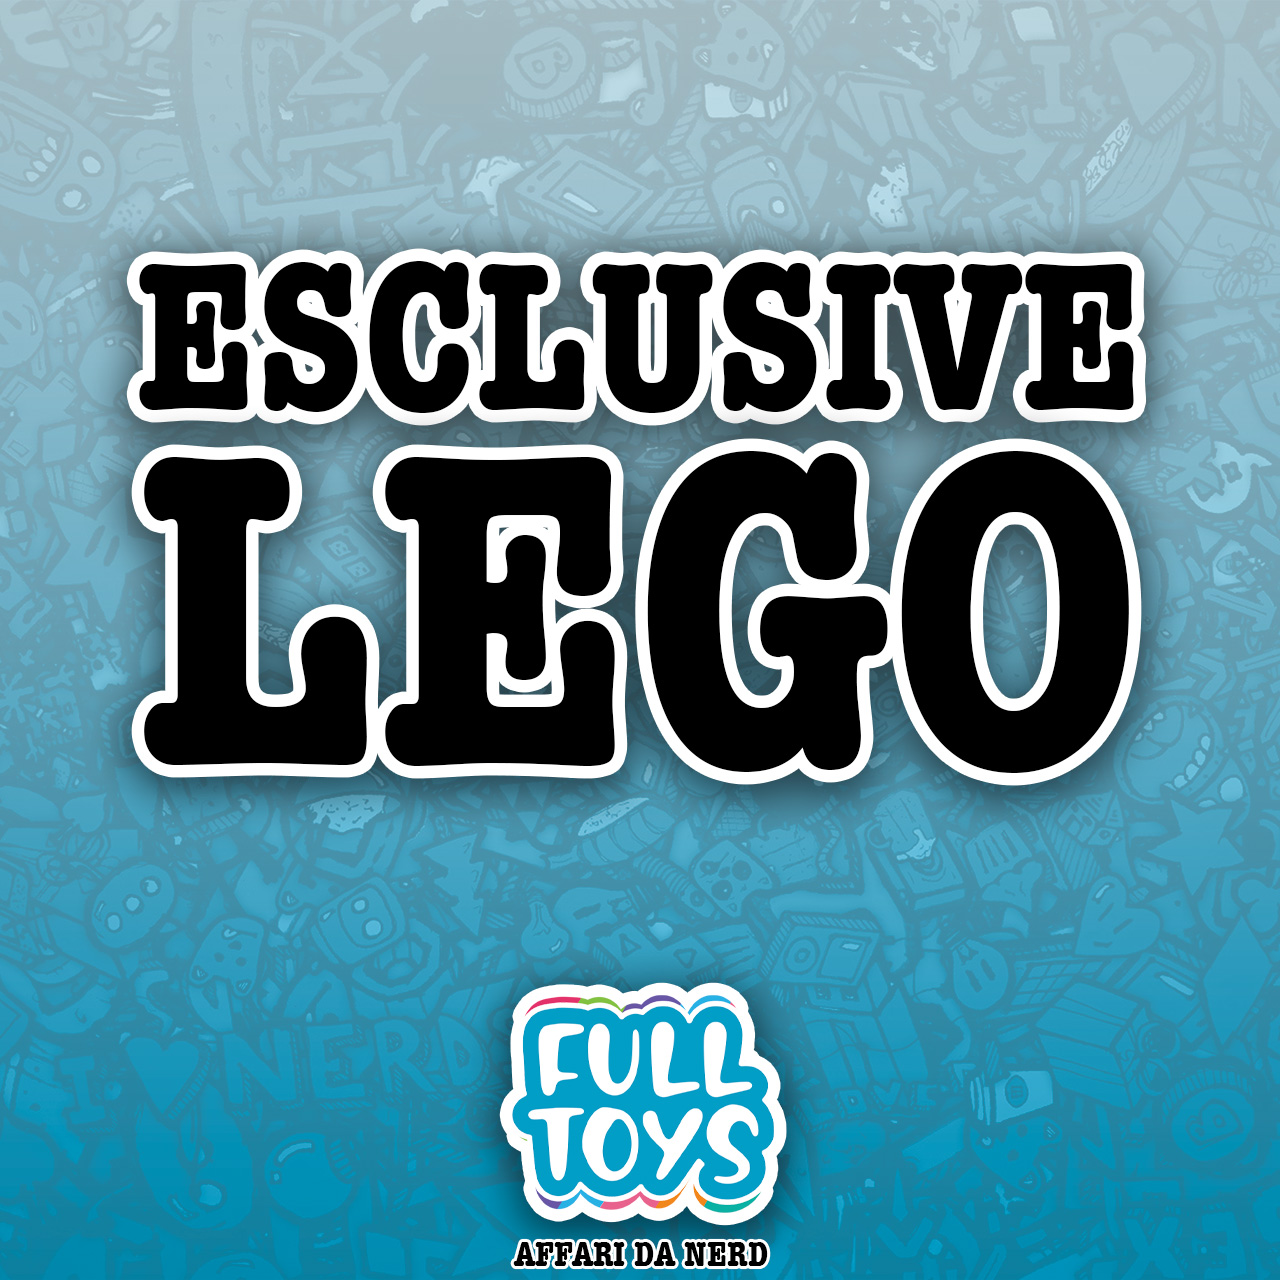 Esclusive LEGO su Full Toys